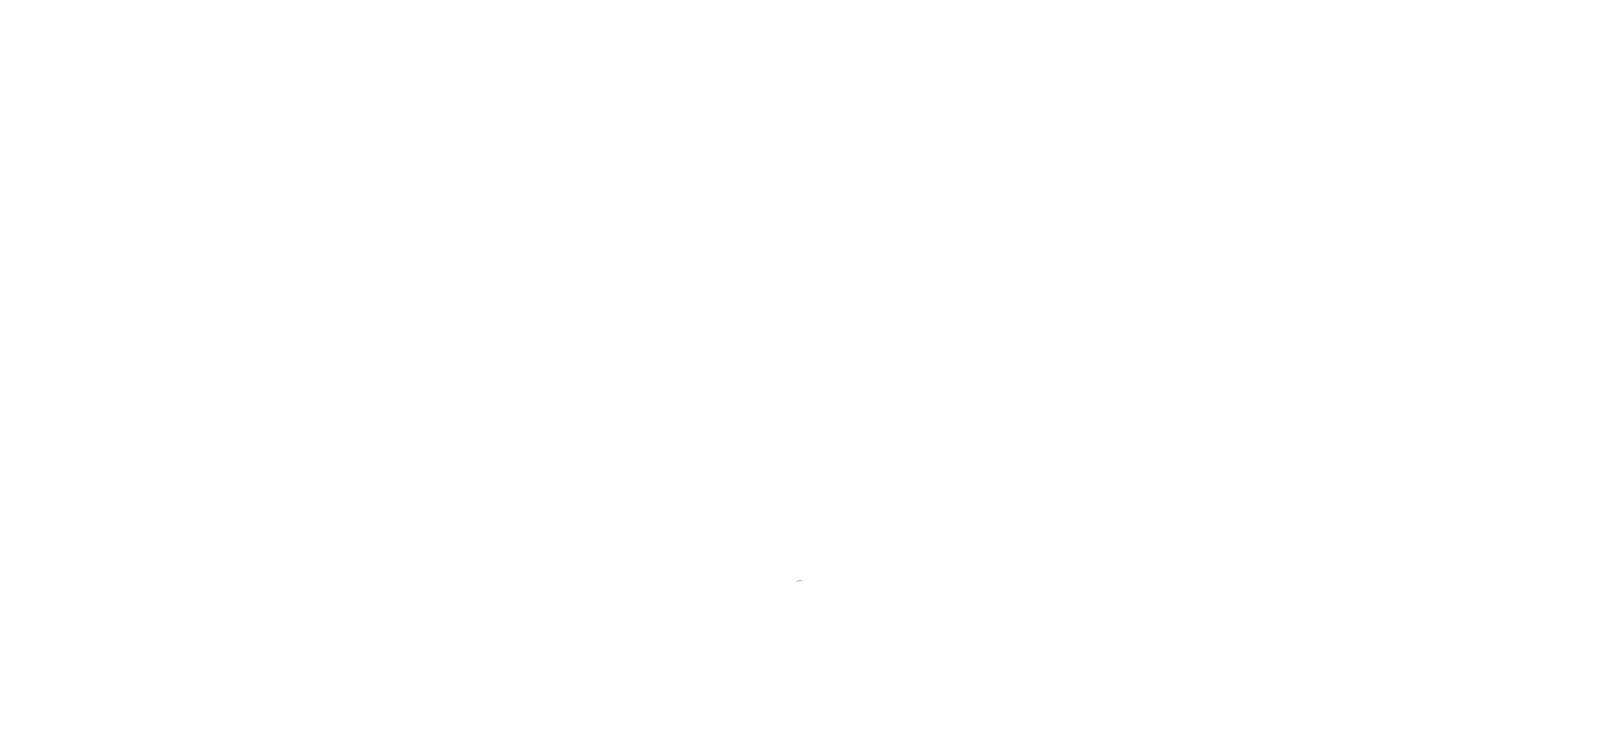 NYU Journal of Intellectual Property & Entertainment Law